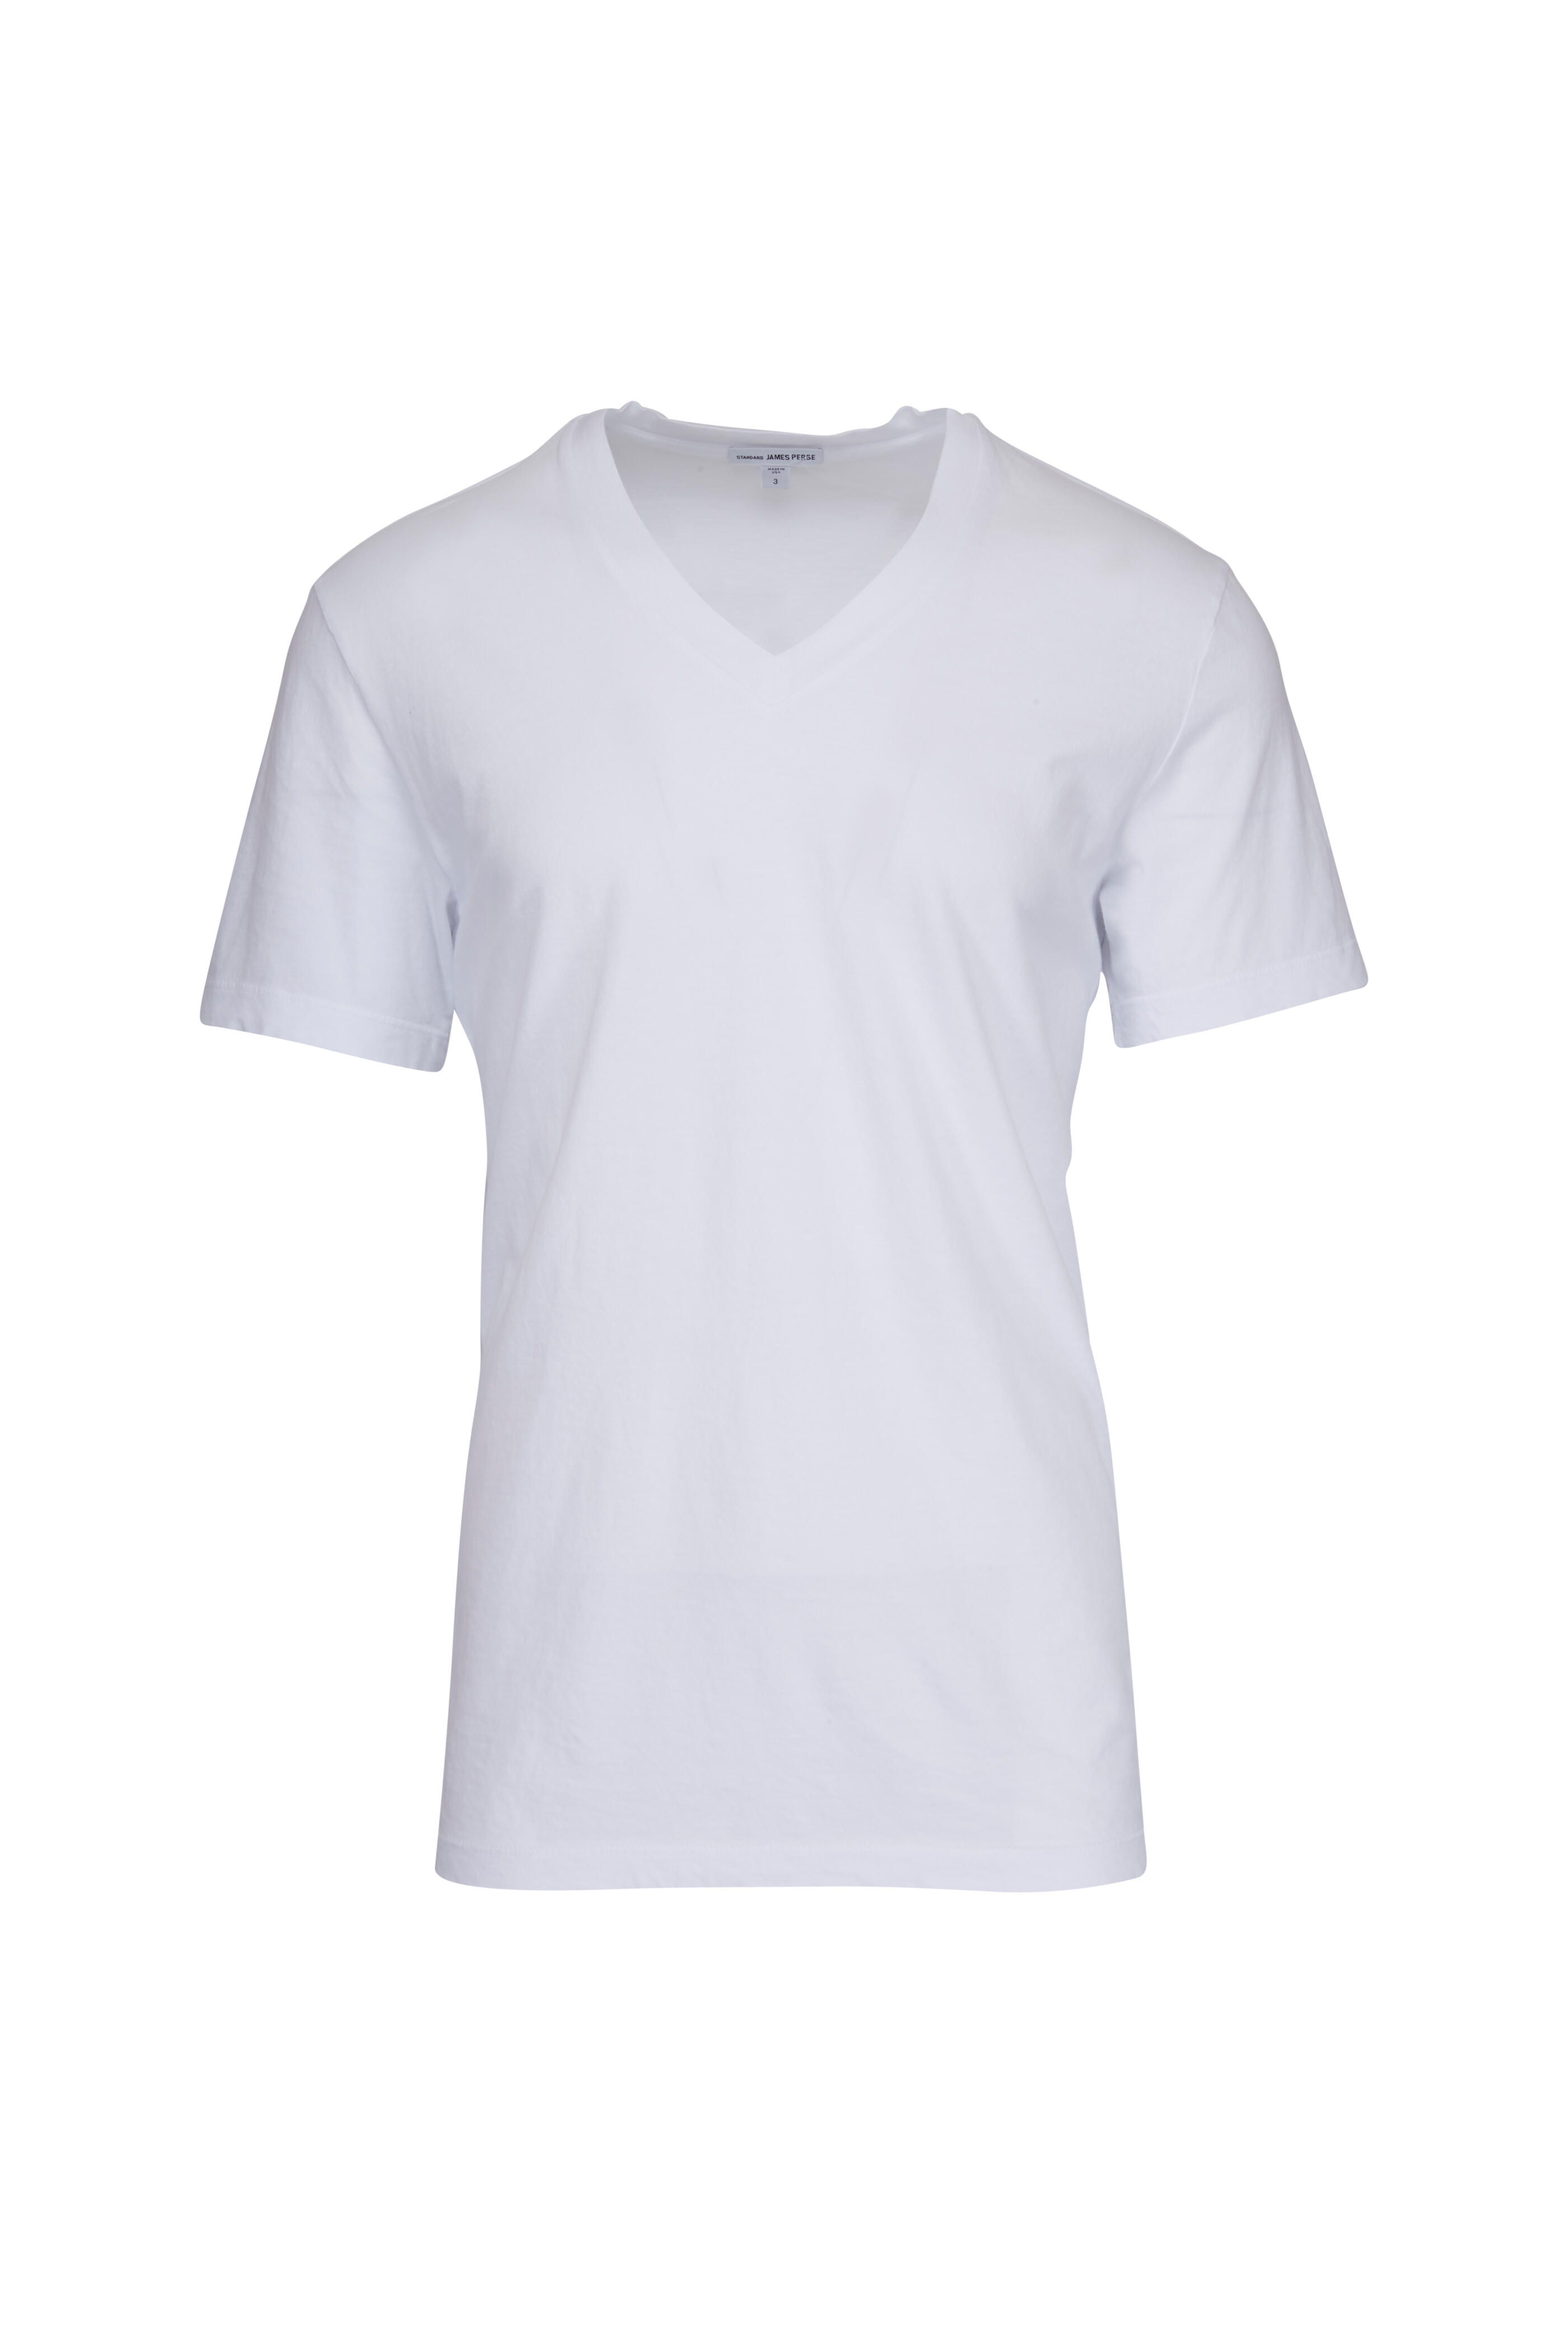 Centimeter assimilation Permanent James Perse - White Cotton V-Neck T-Shirt | Mitchell Stores